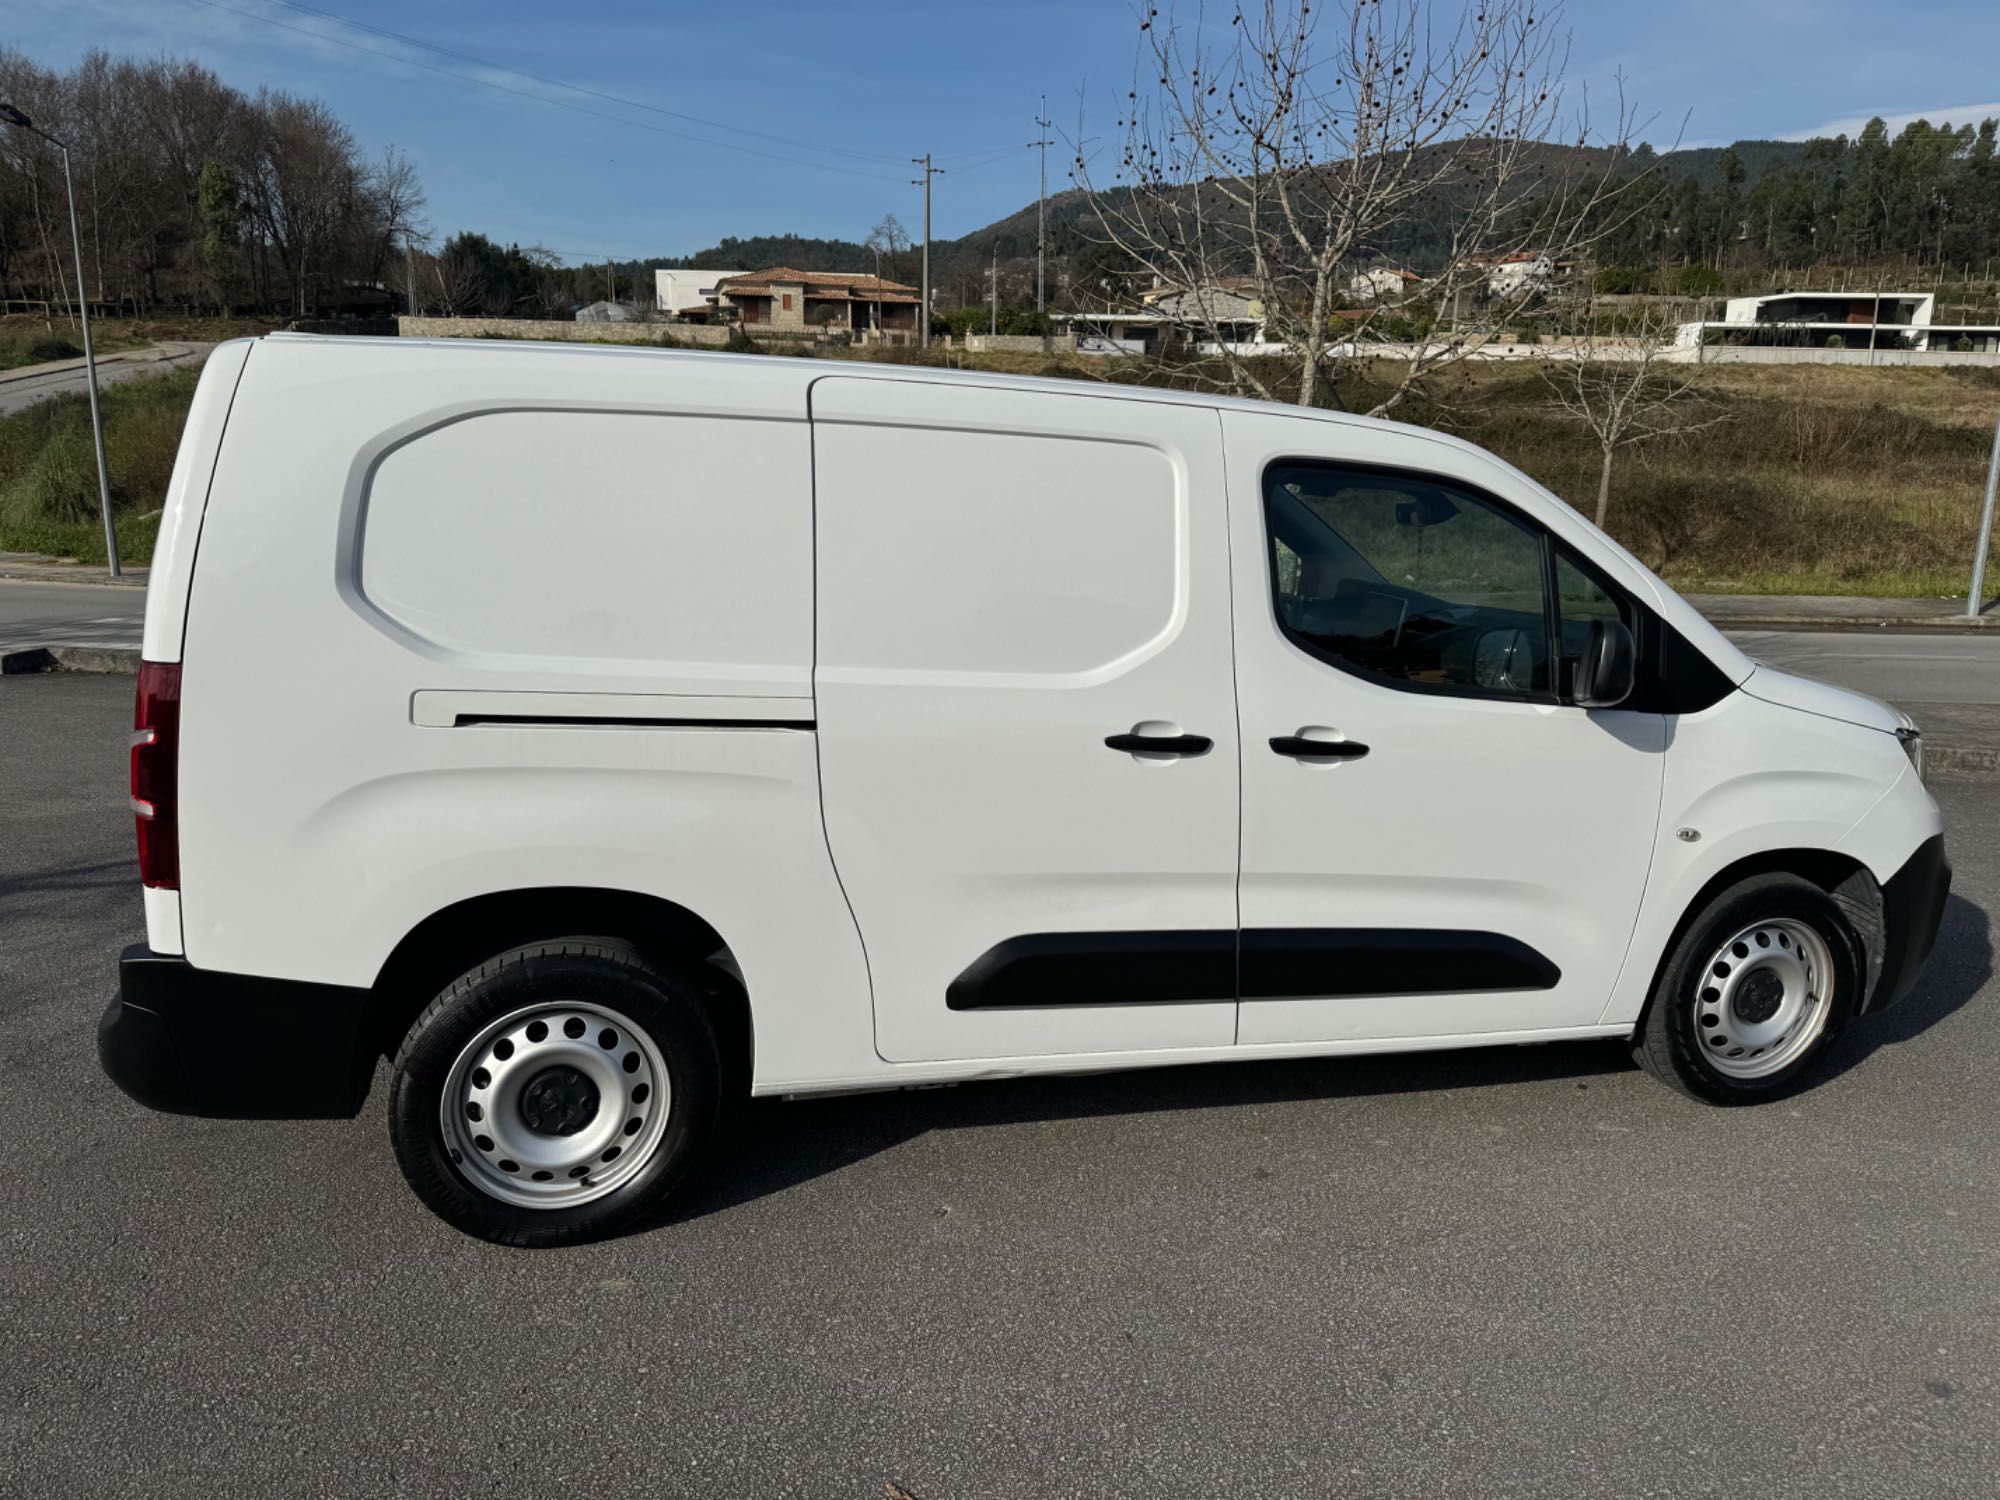 Peugeot partner 2019 longa maxi
1.6 HDI 100 CV 3 lugares